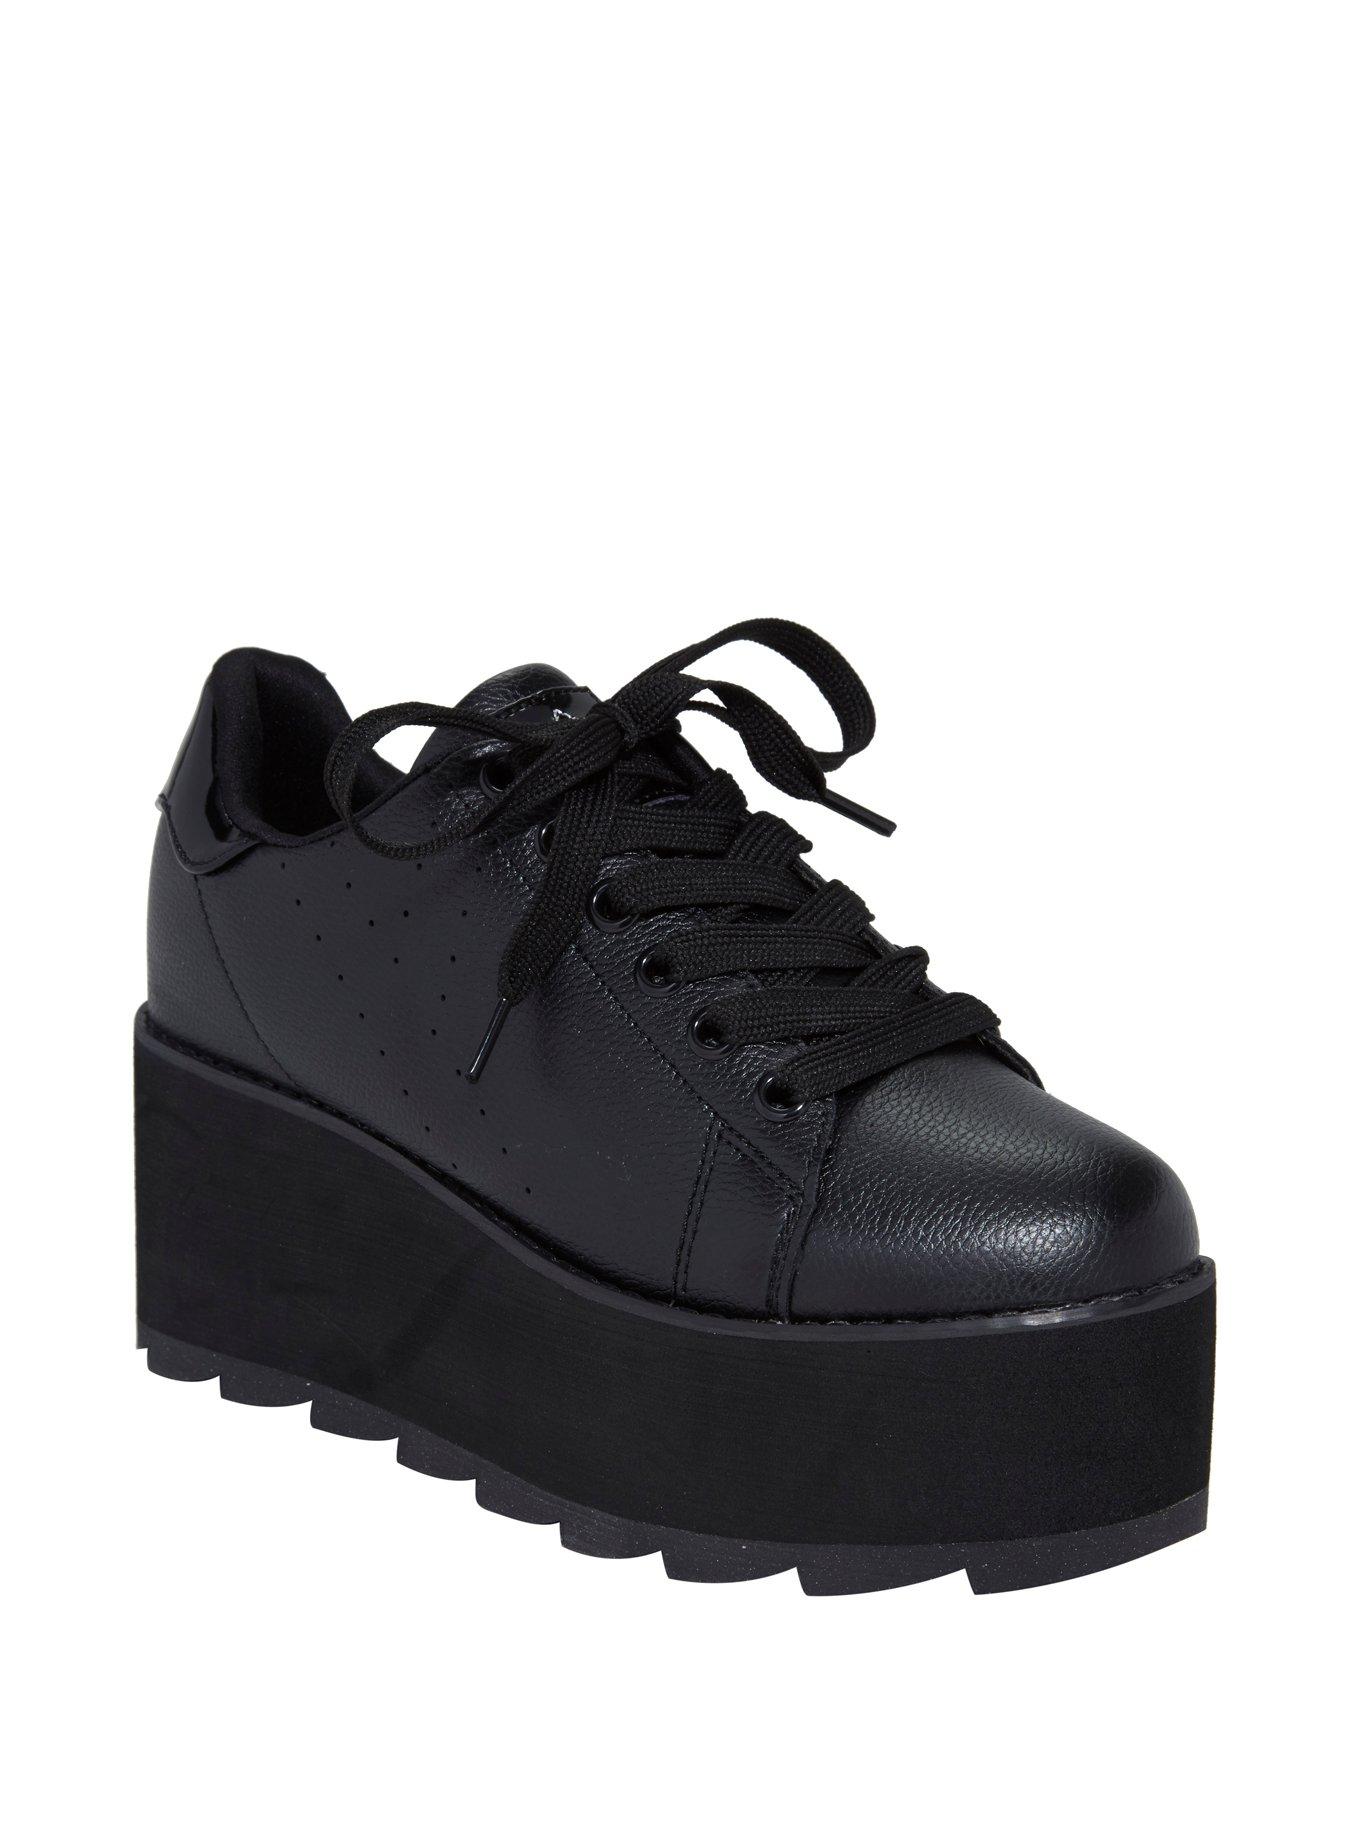 YRU Black Lace-Up Platform Sneakers, BLACK, hi-res